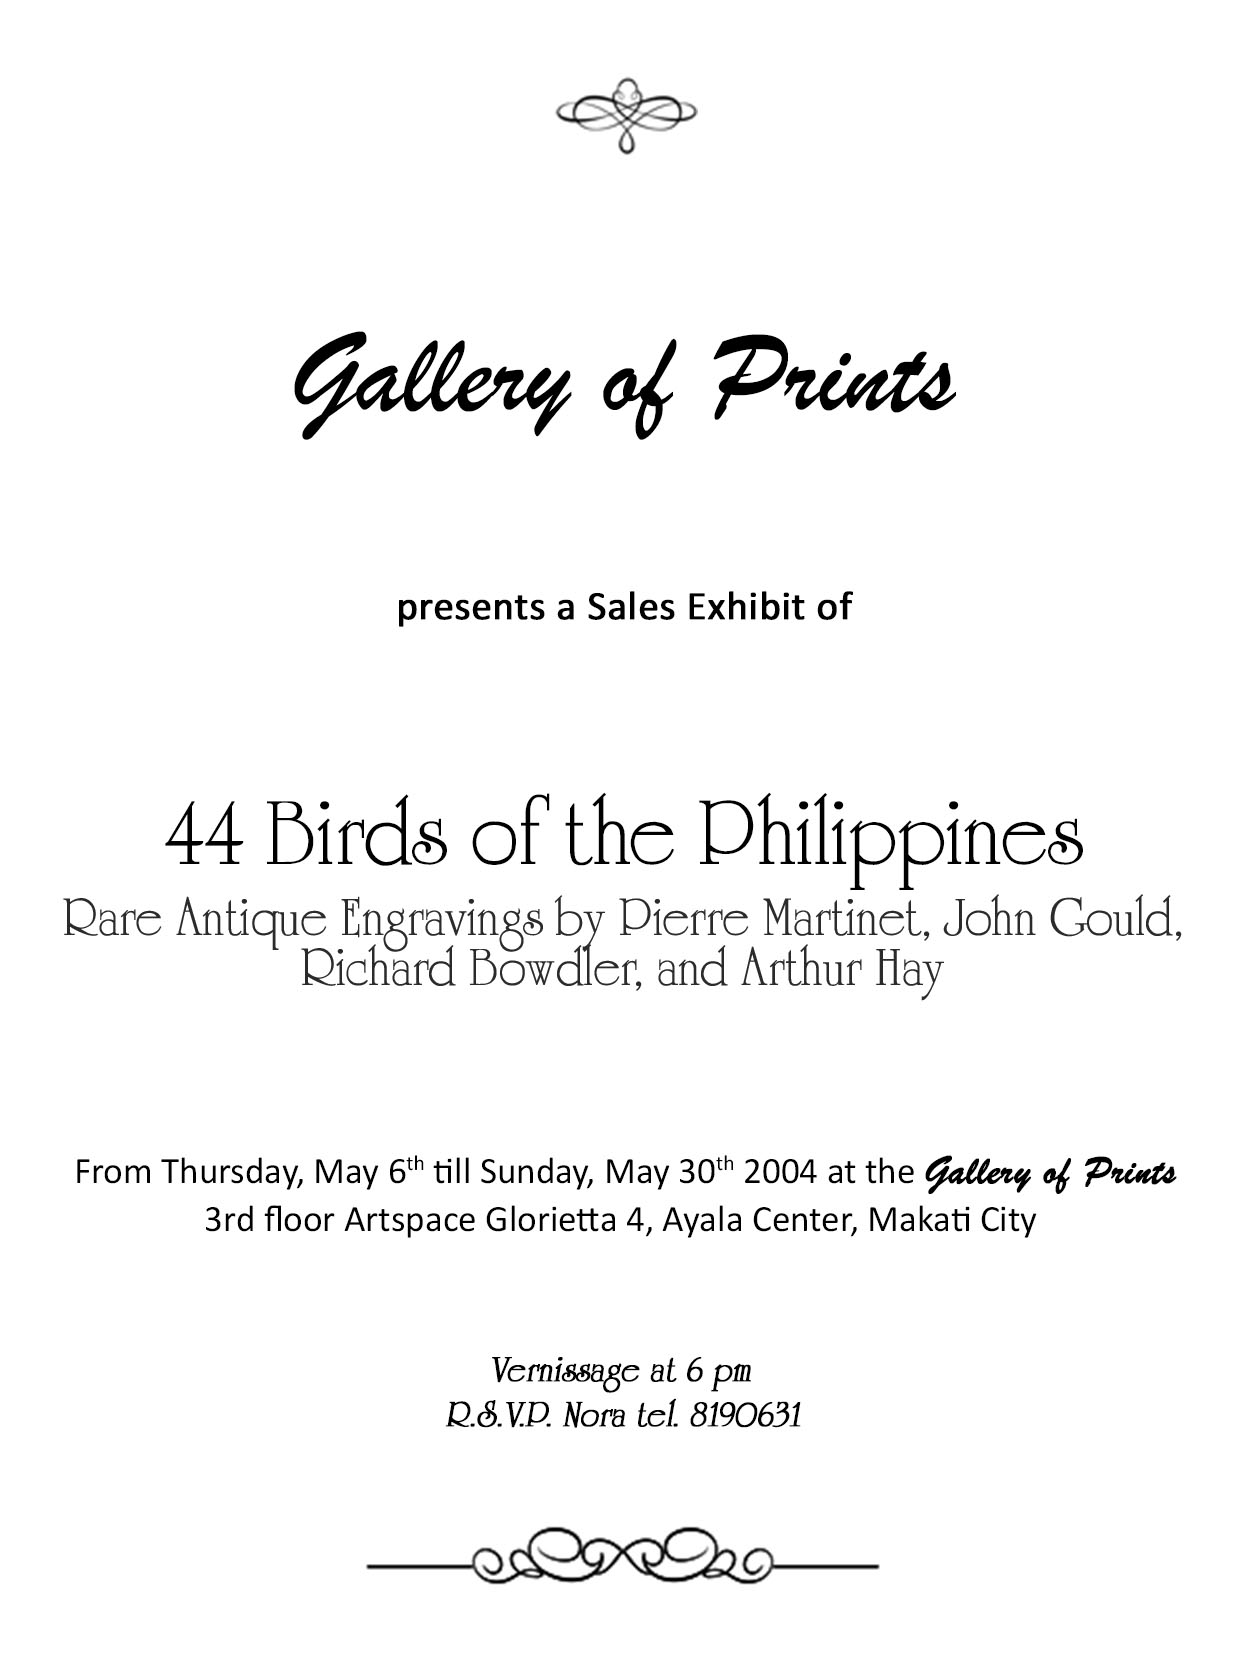 44 Birds of the Philippines